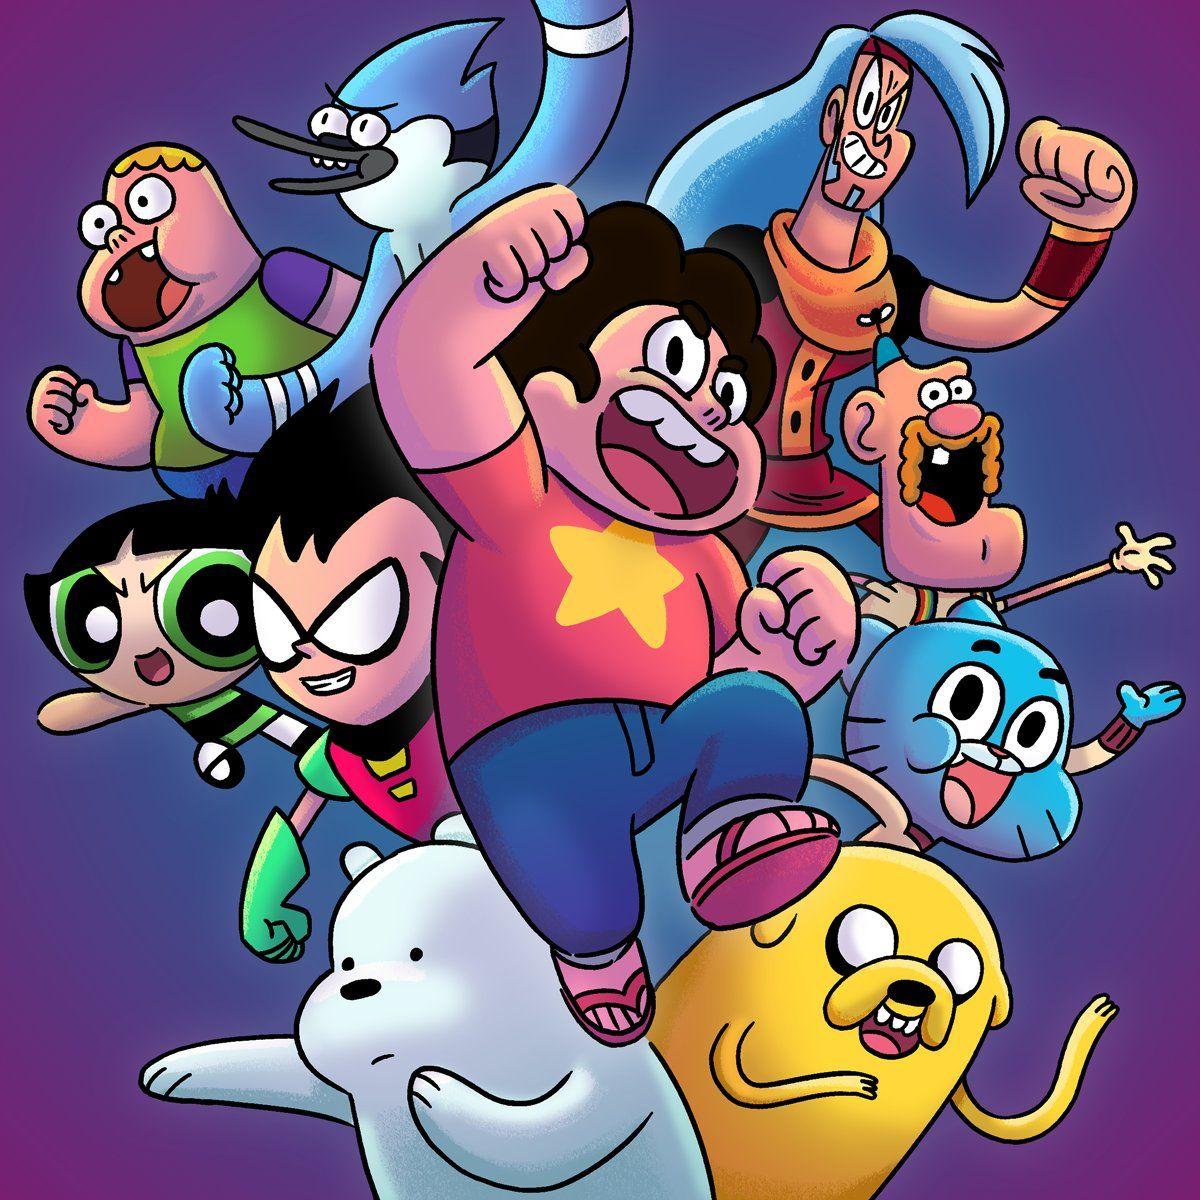 Cartoon Network Characters Wallpaper Free #cartoon #network